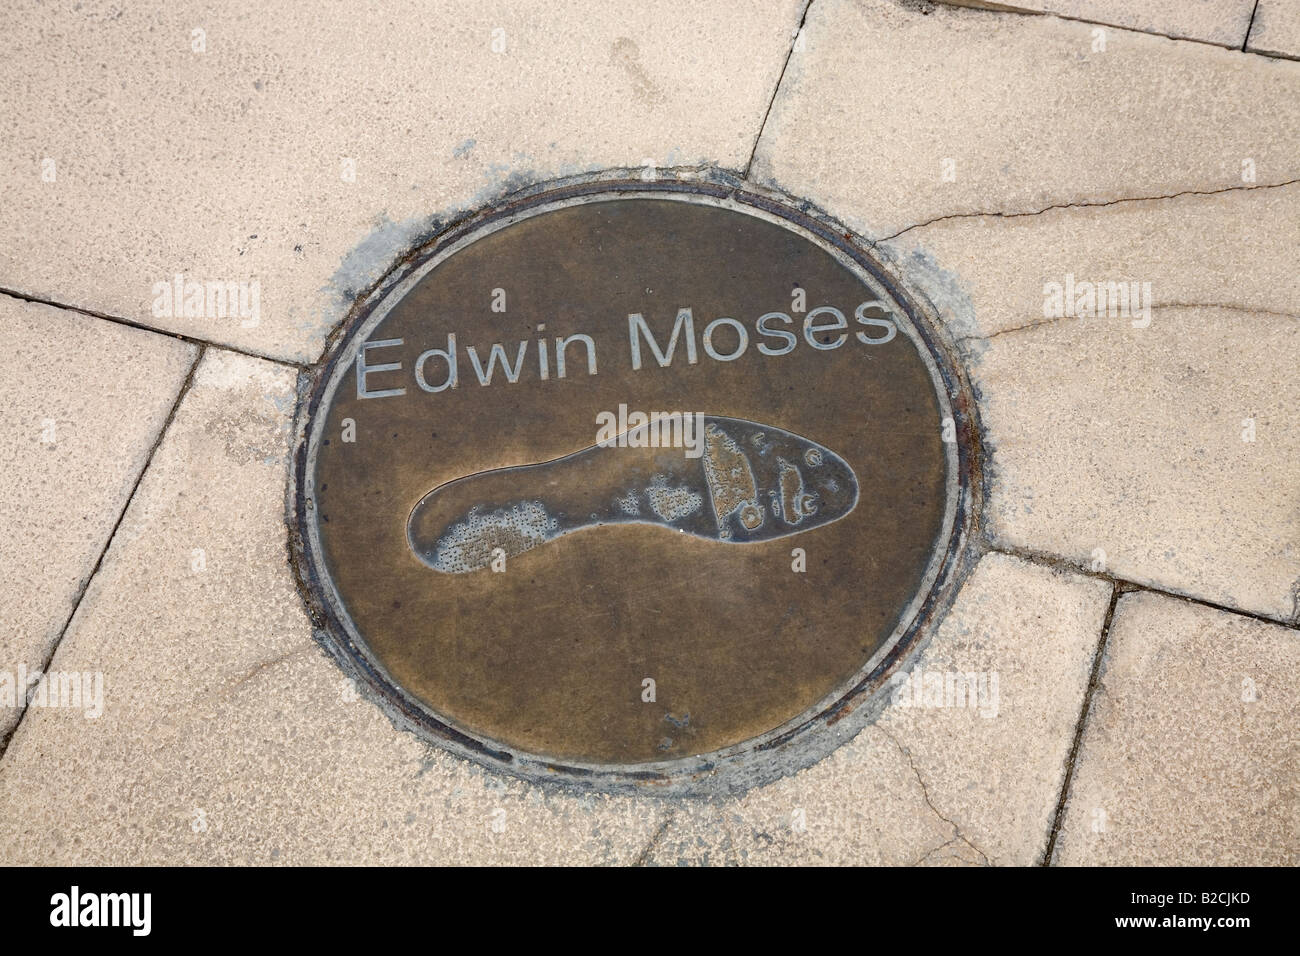 Edwin Moses footprints at the Olympic Stadium Barcelona Spain May 2008 Stock Photo